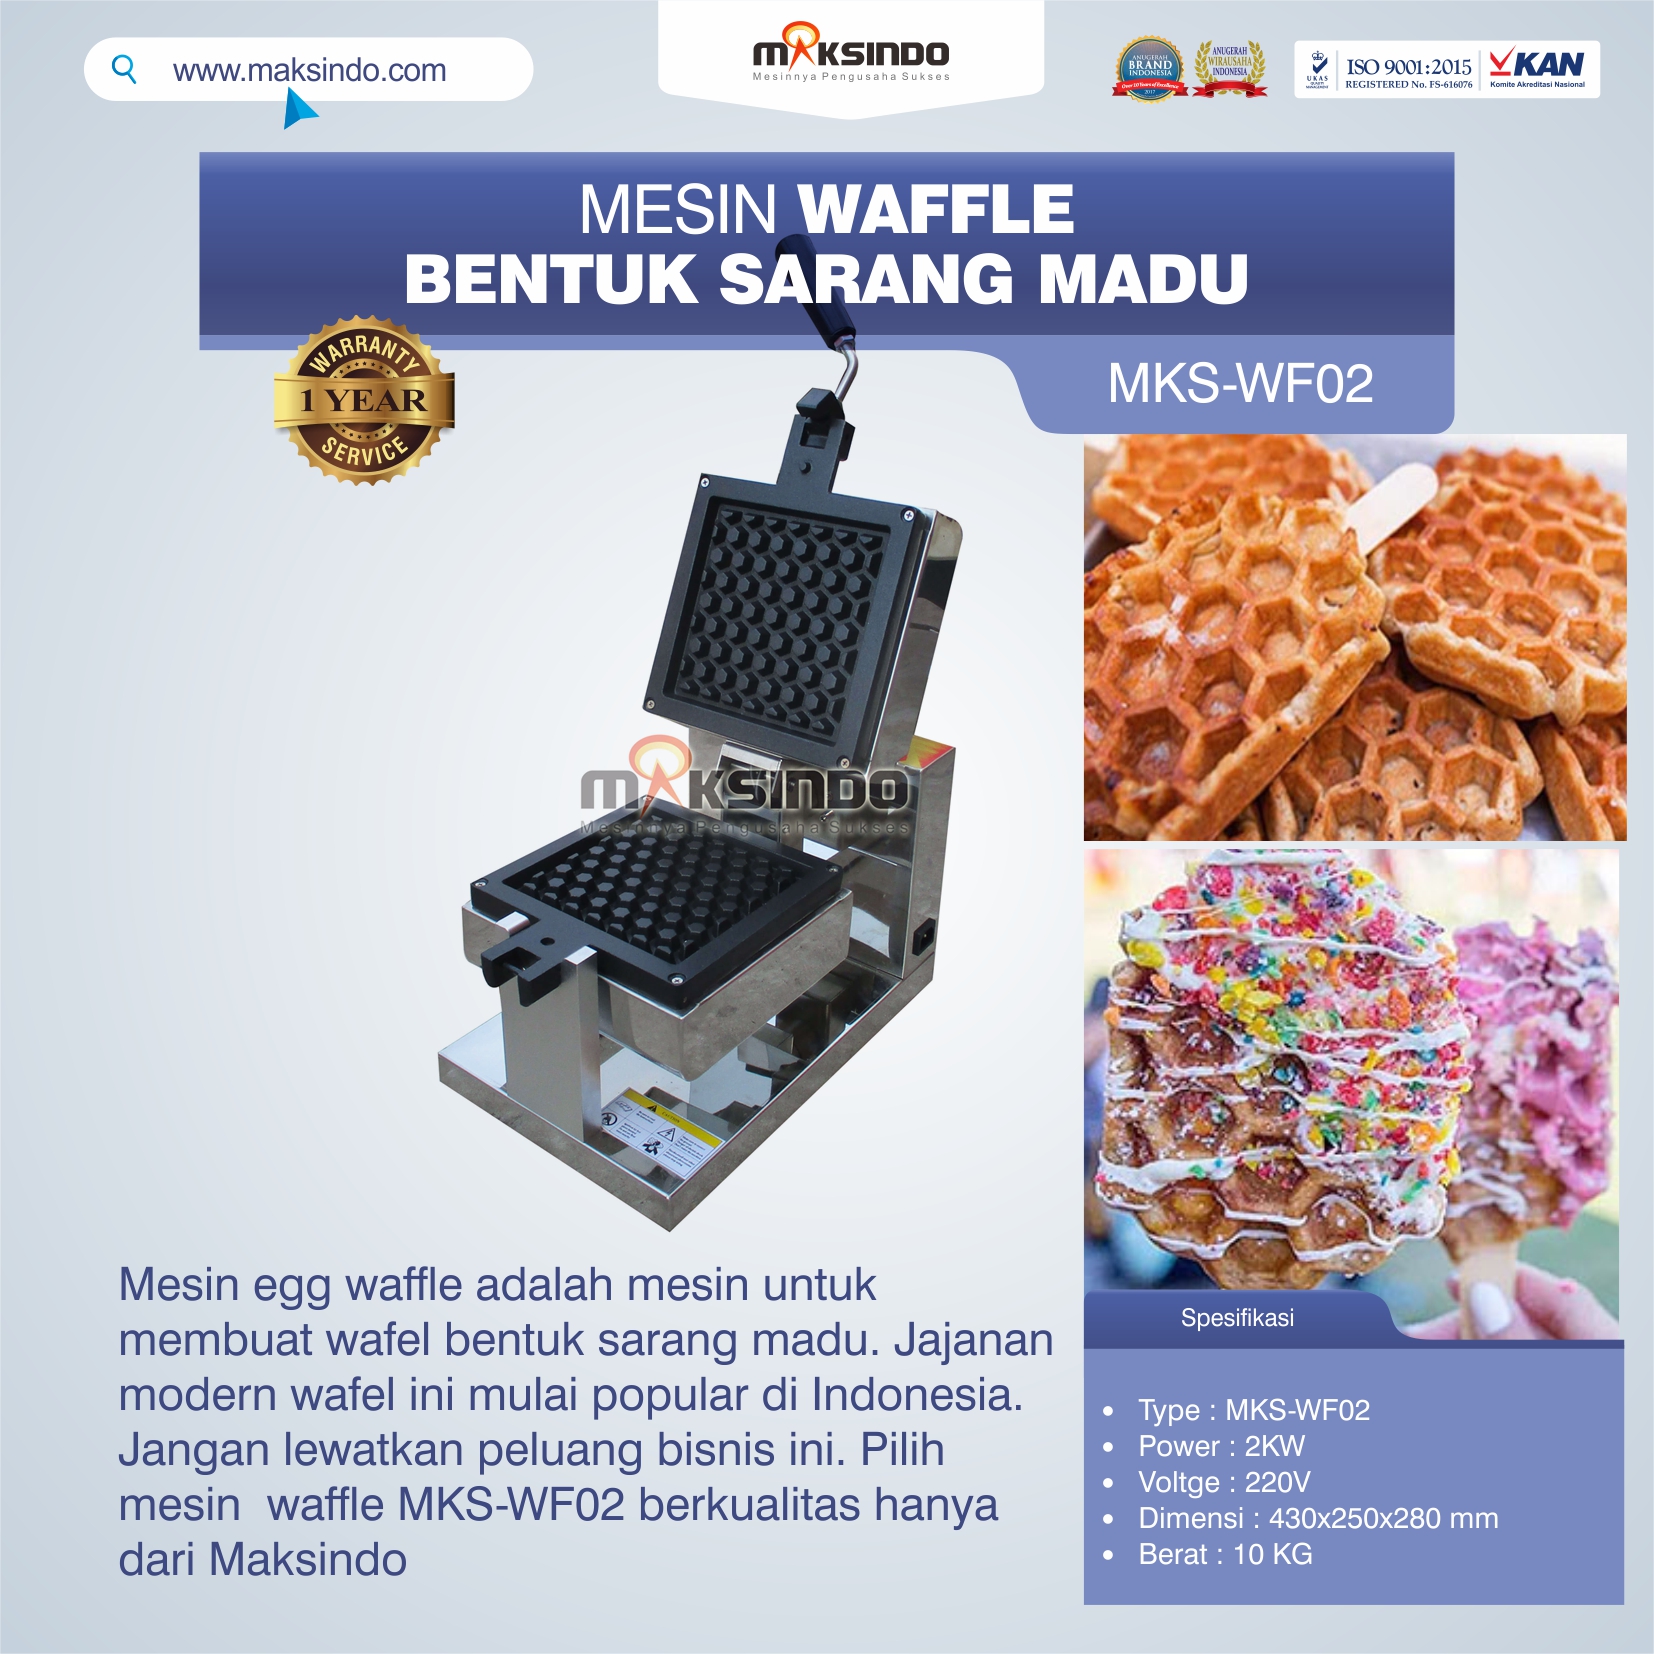 Jual Mesin Waffle Bentuk Sarang Madu MKS-WF02 di Medan